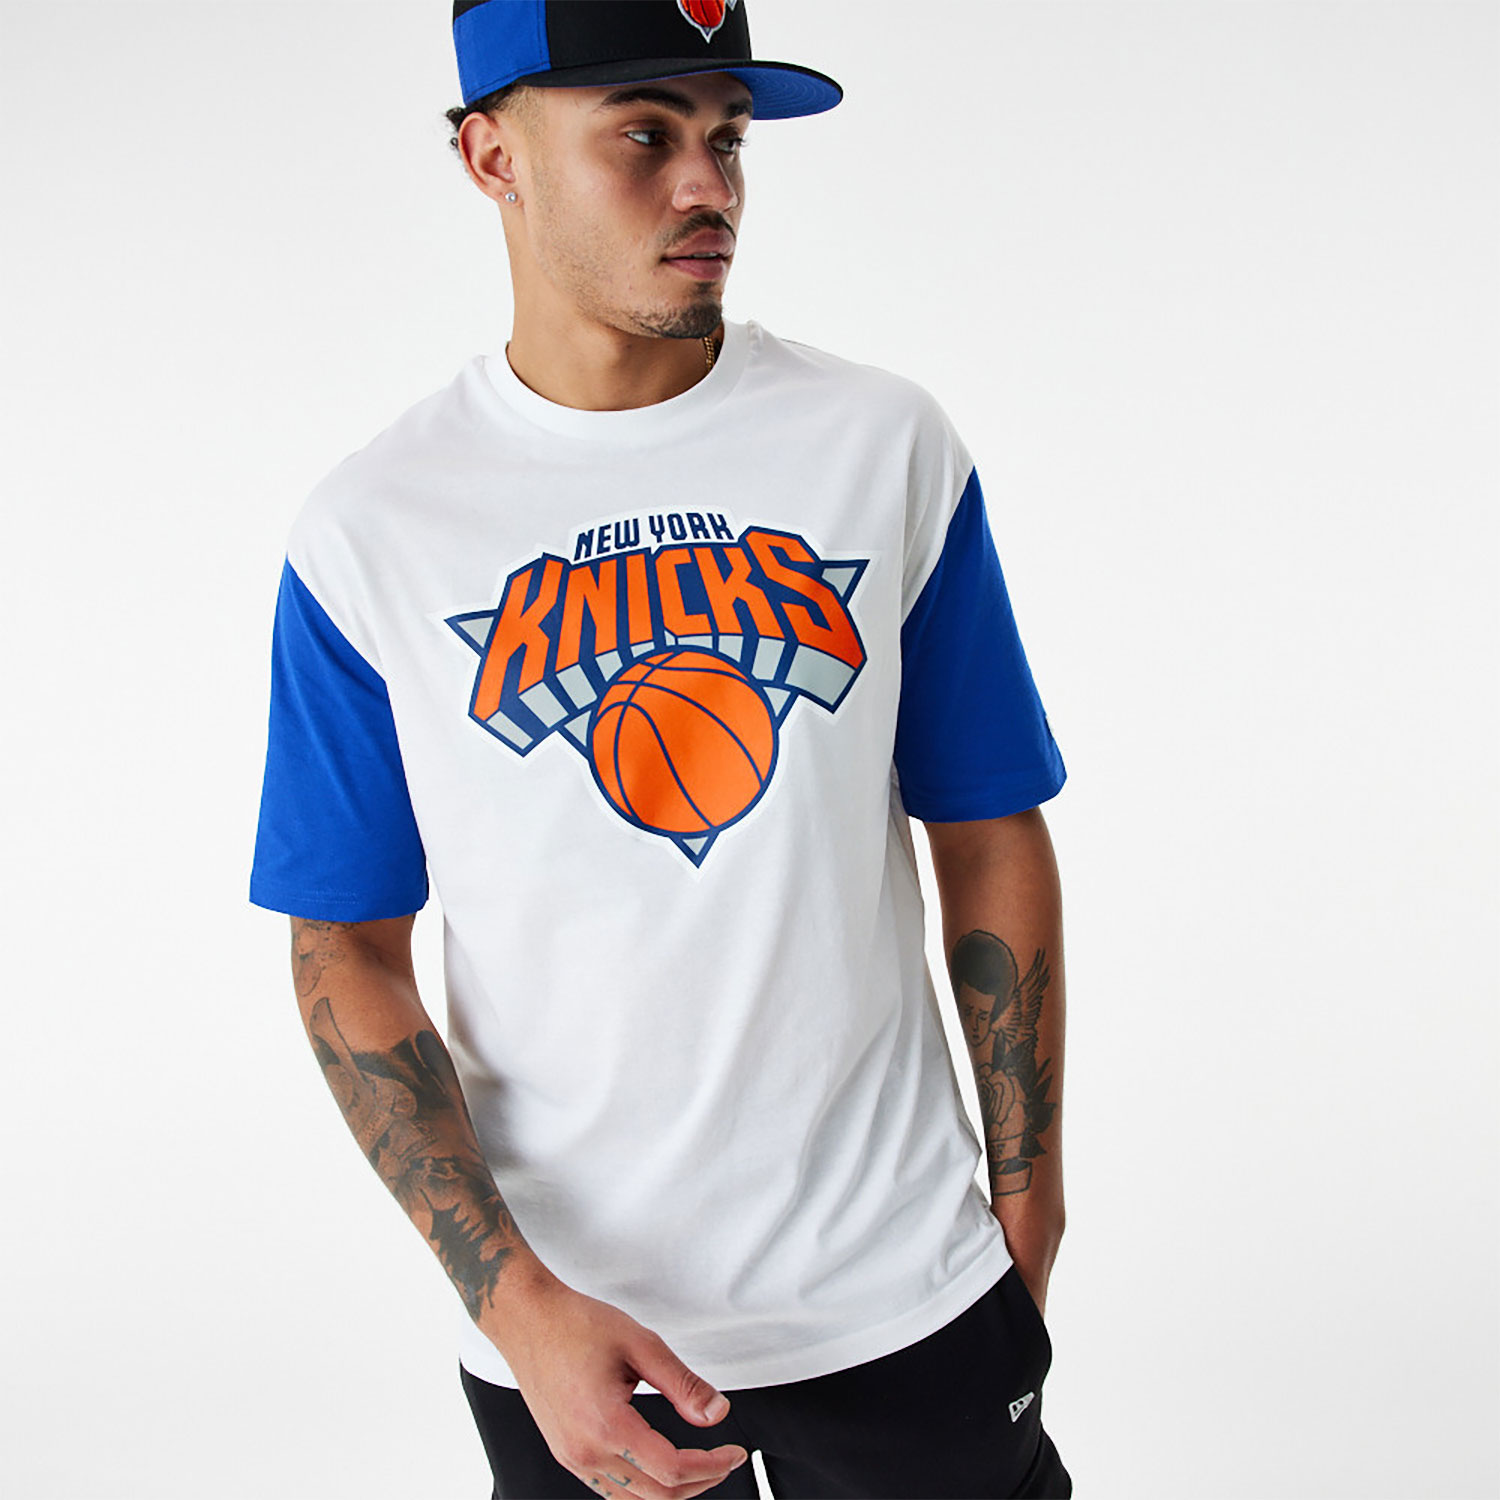 New York Knicks NBA Colour Block White Oversized T-Shirt